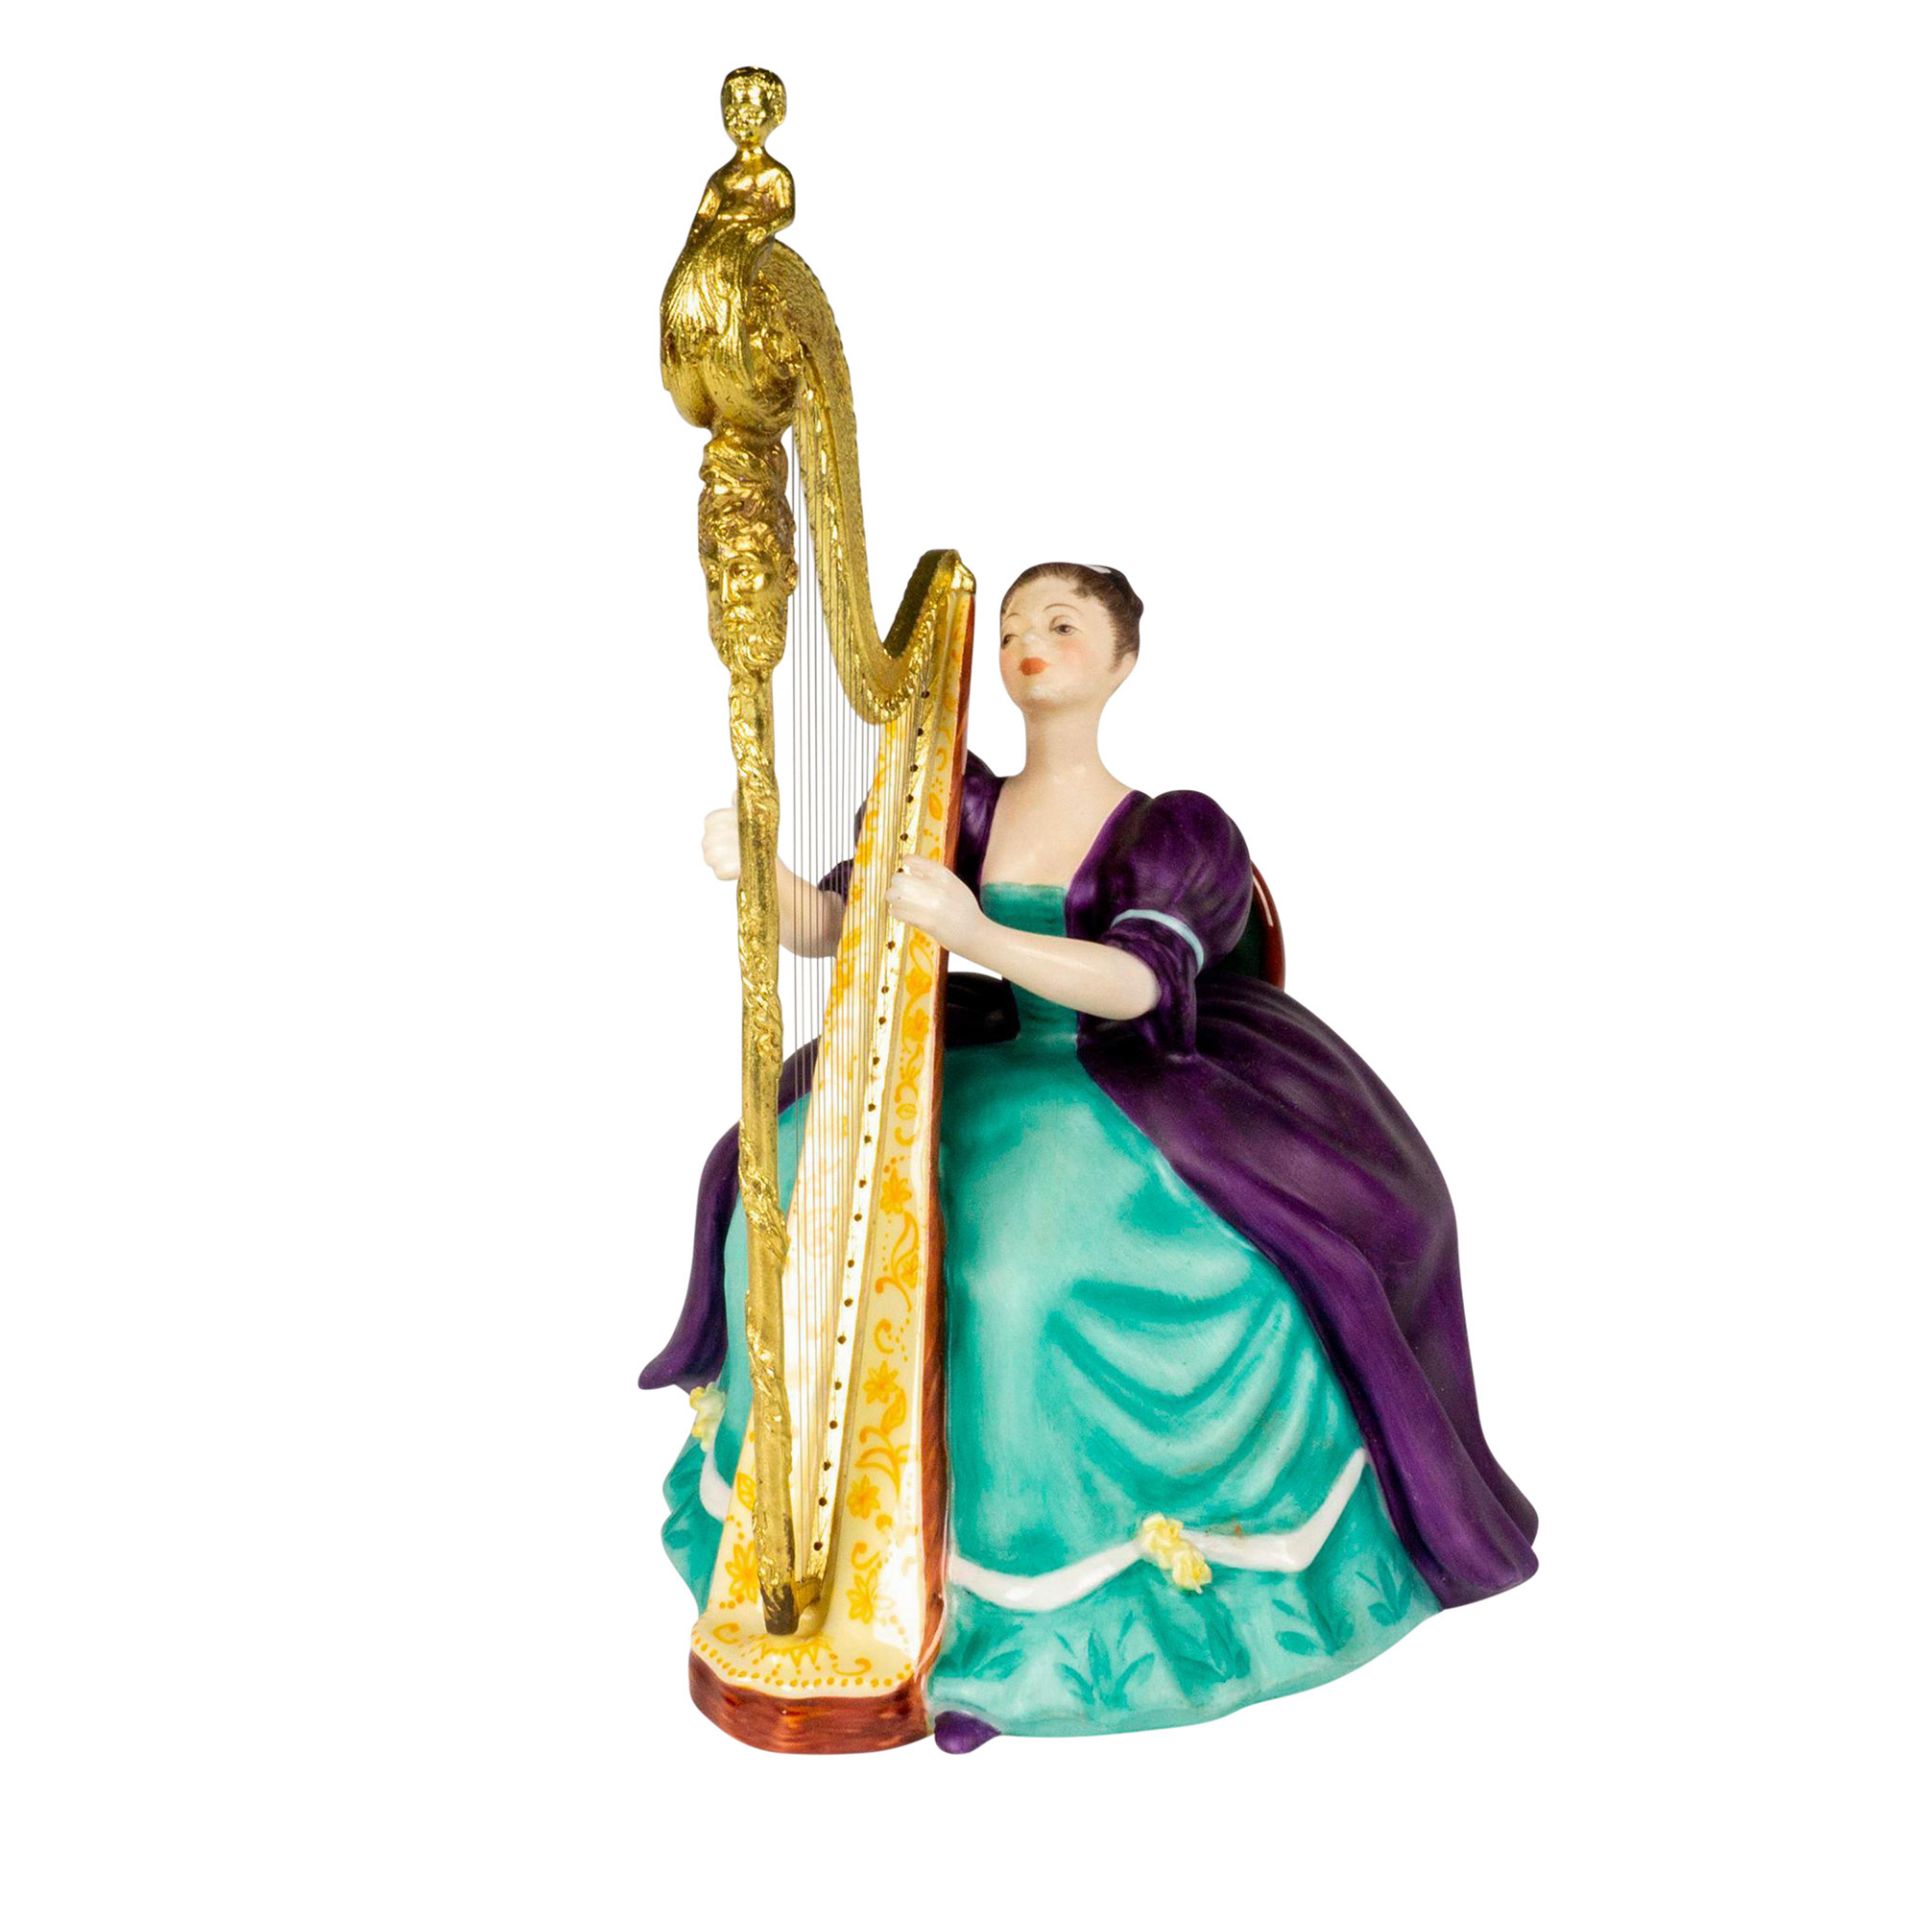 Harp HN2482 - Royal Doulton Figurine